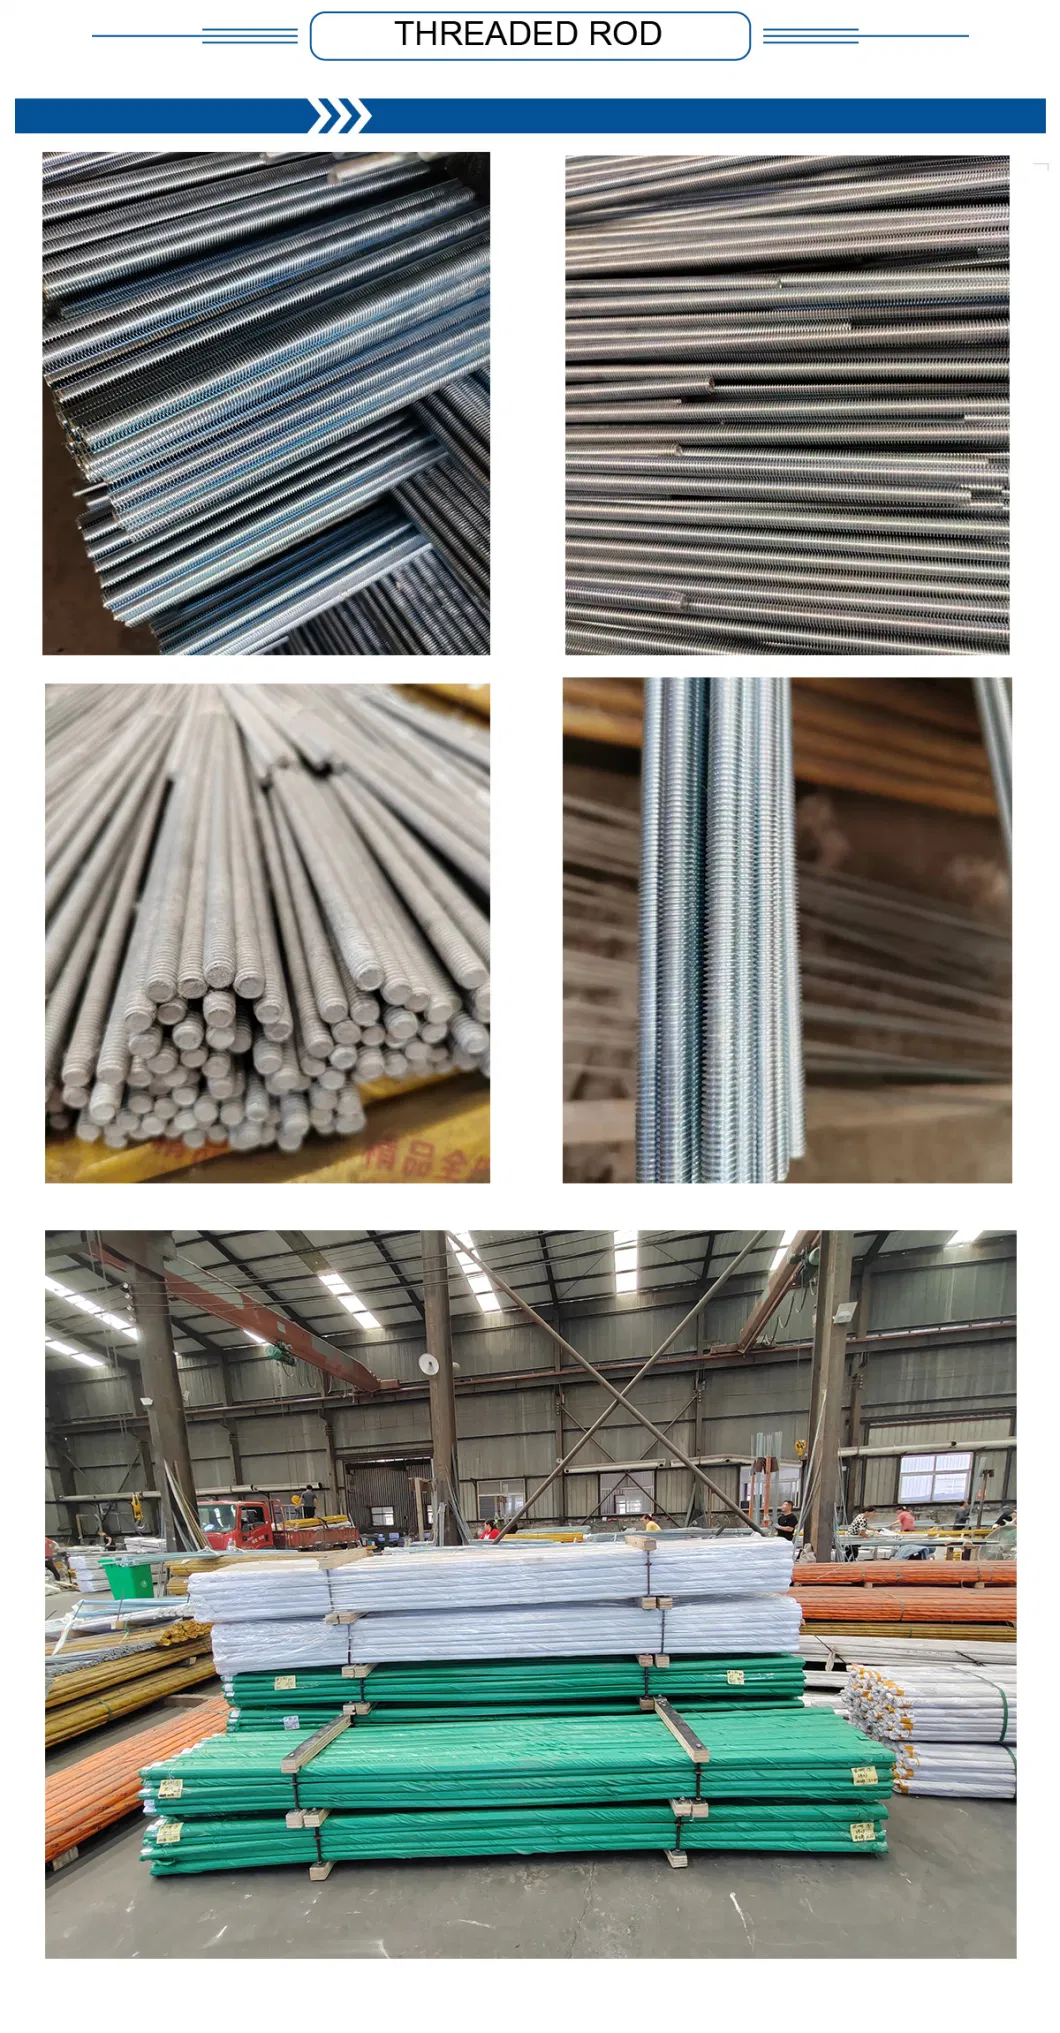 DIN975 Carbon Steel Stainless Steel SS304 Ss 316 Grade/Class 4.8 6.8 8.8 Threaded Rod 10.9 Black Zinc Plated Threaded Bar Thread Rod